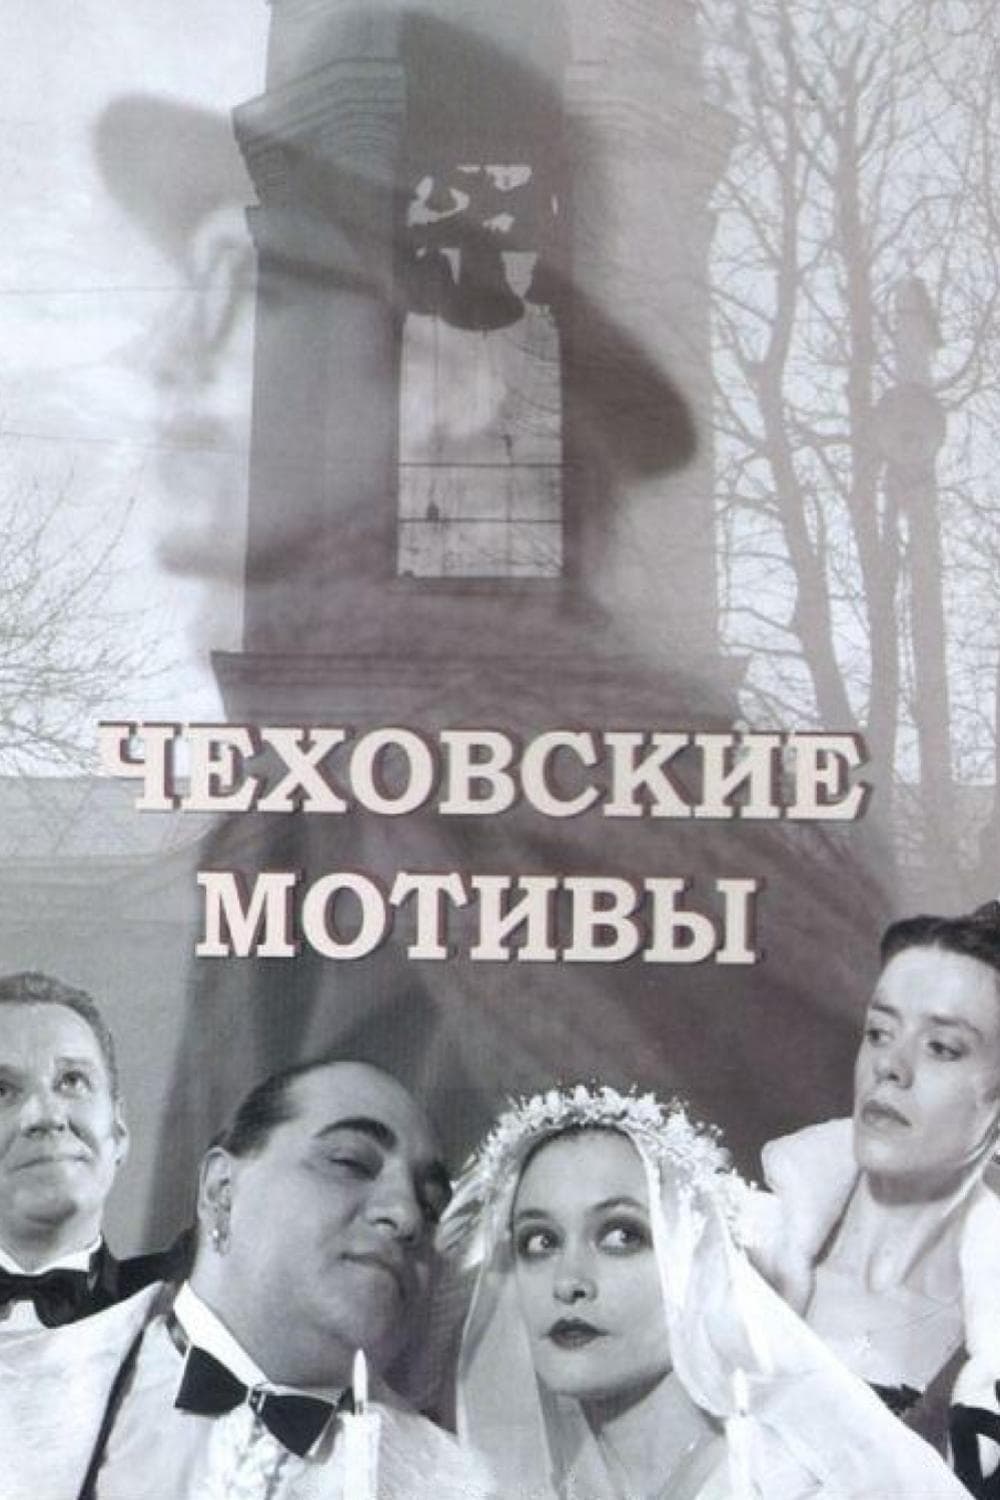 Chekhovian Motifs (2002)